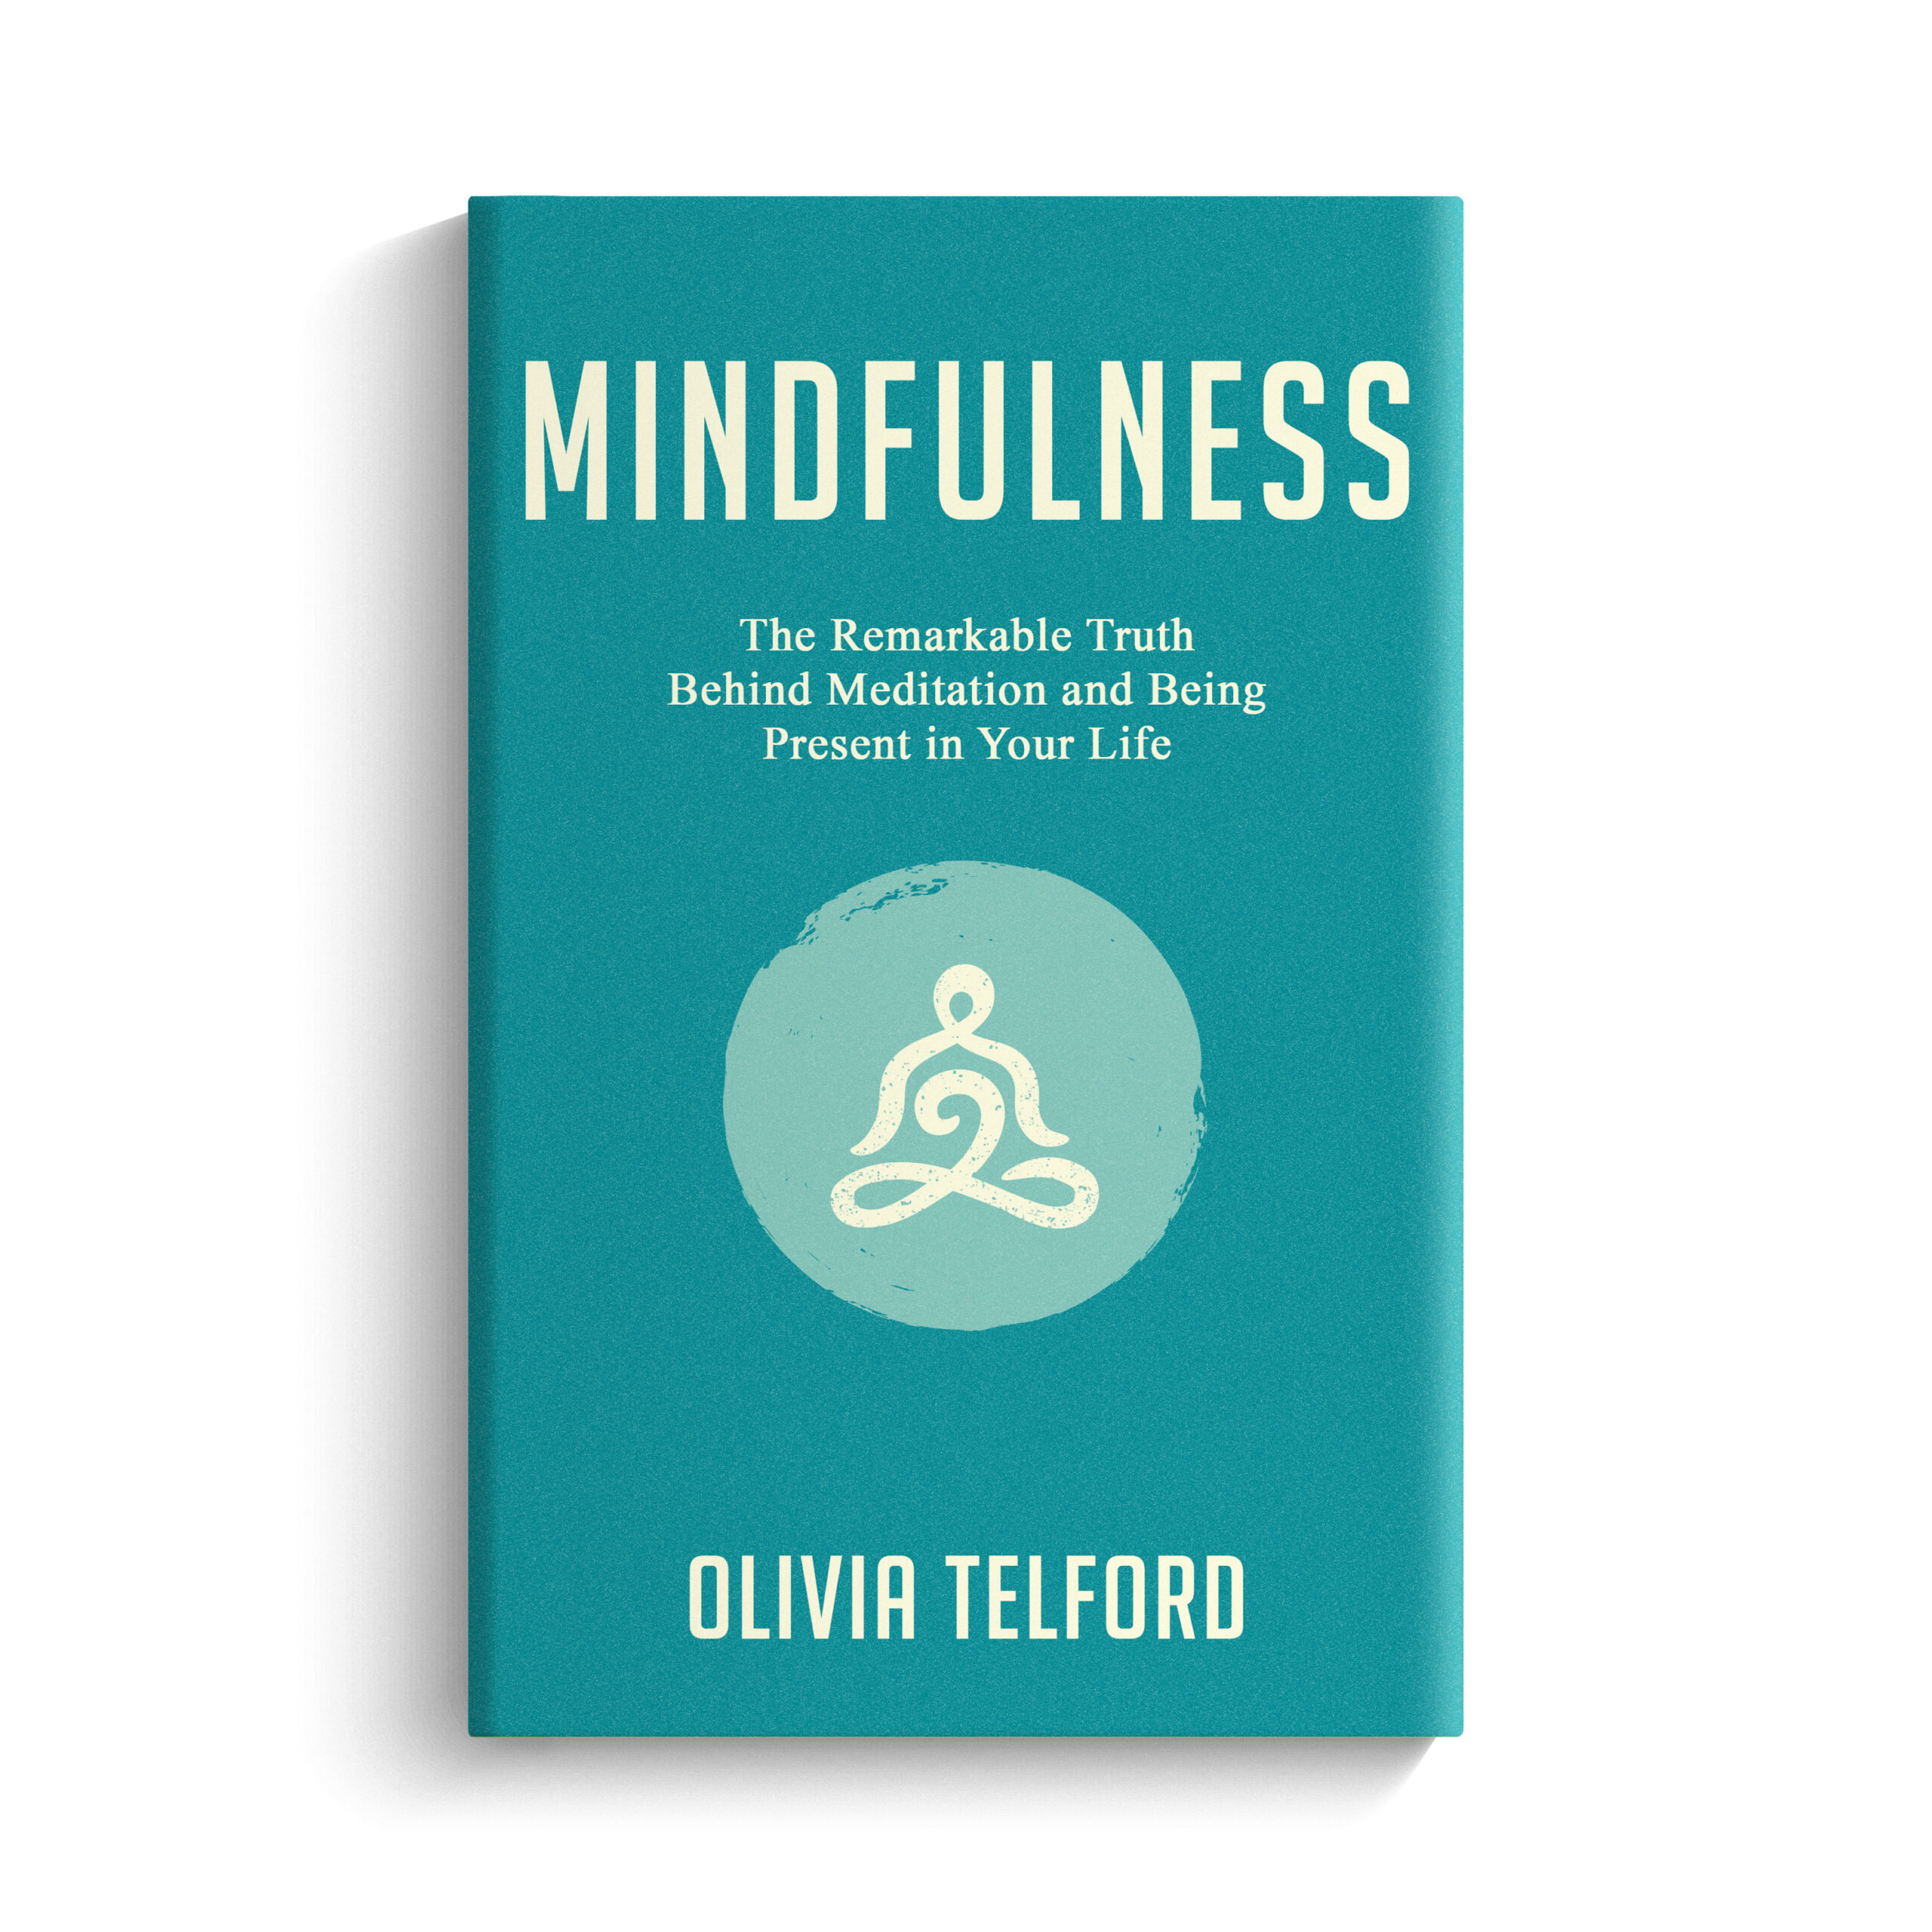 Mindfulness by Olivia Telford